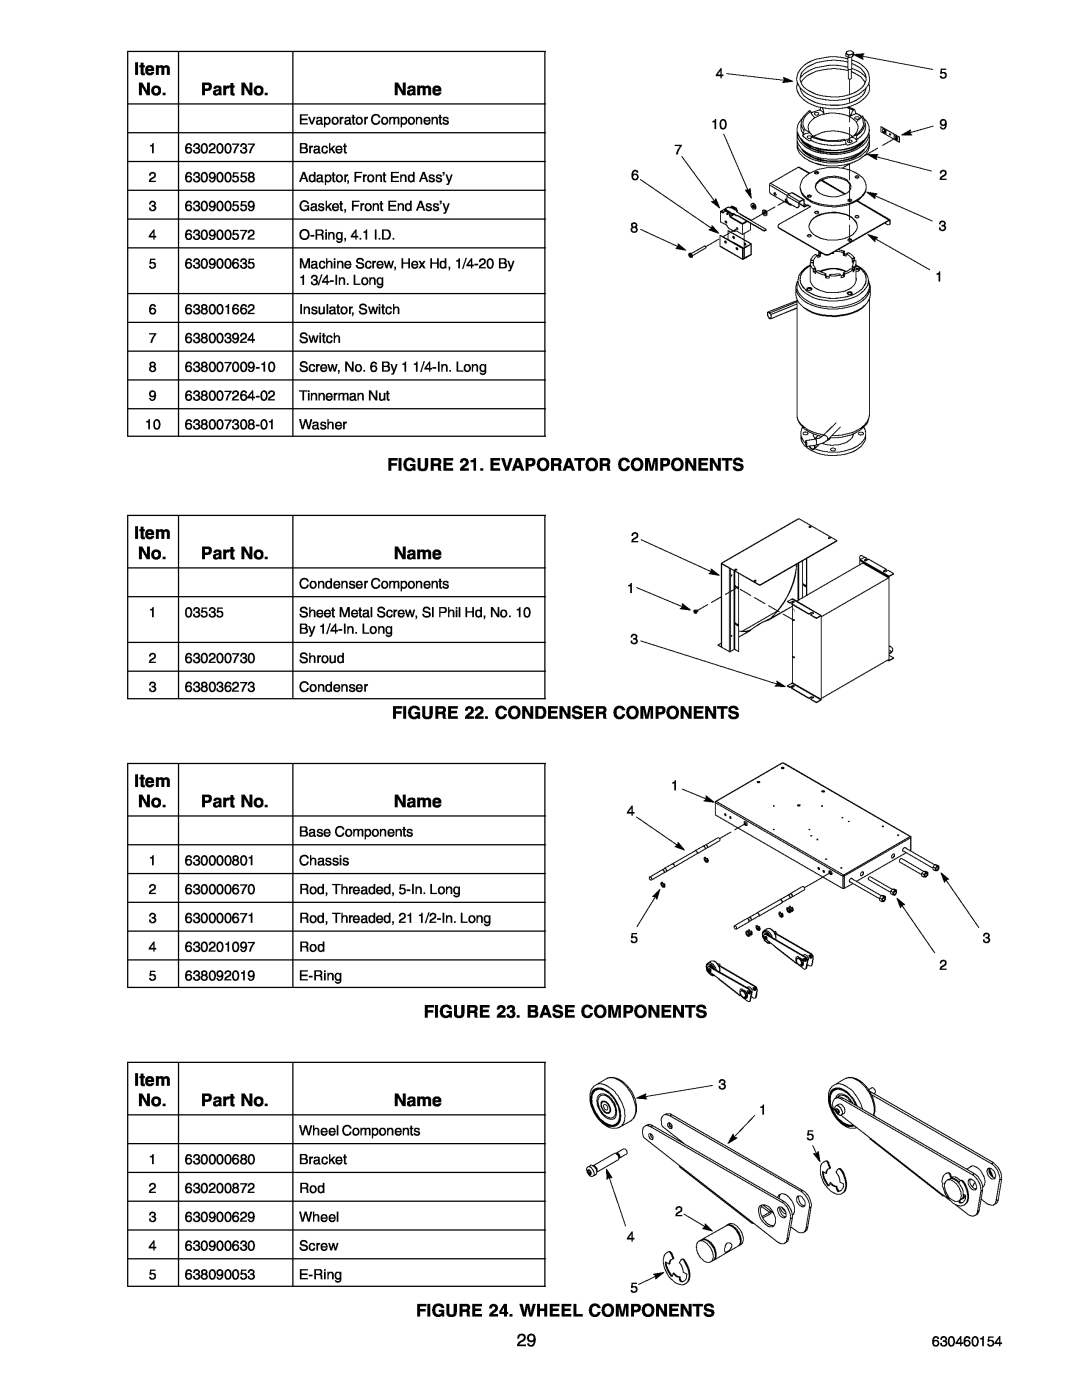 Cornelius UCR 700 Series Evaporator Components, Condenser Components, Base Components, Wheel Components, Name 